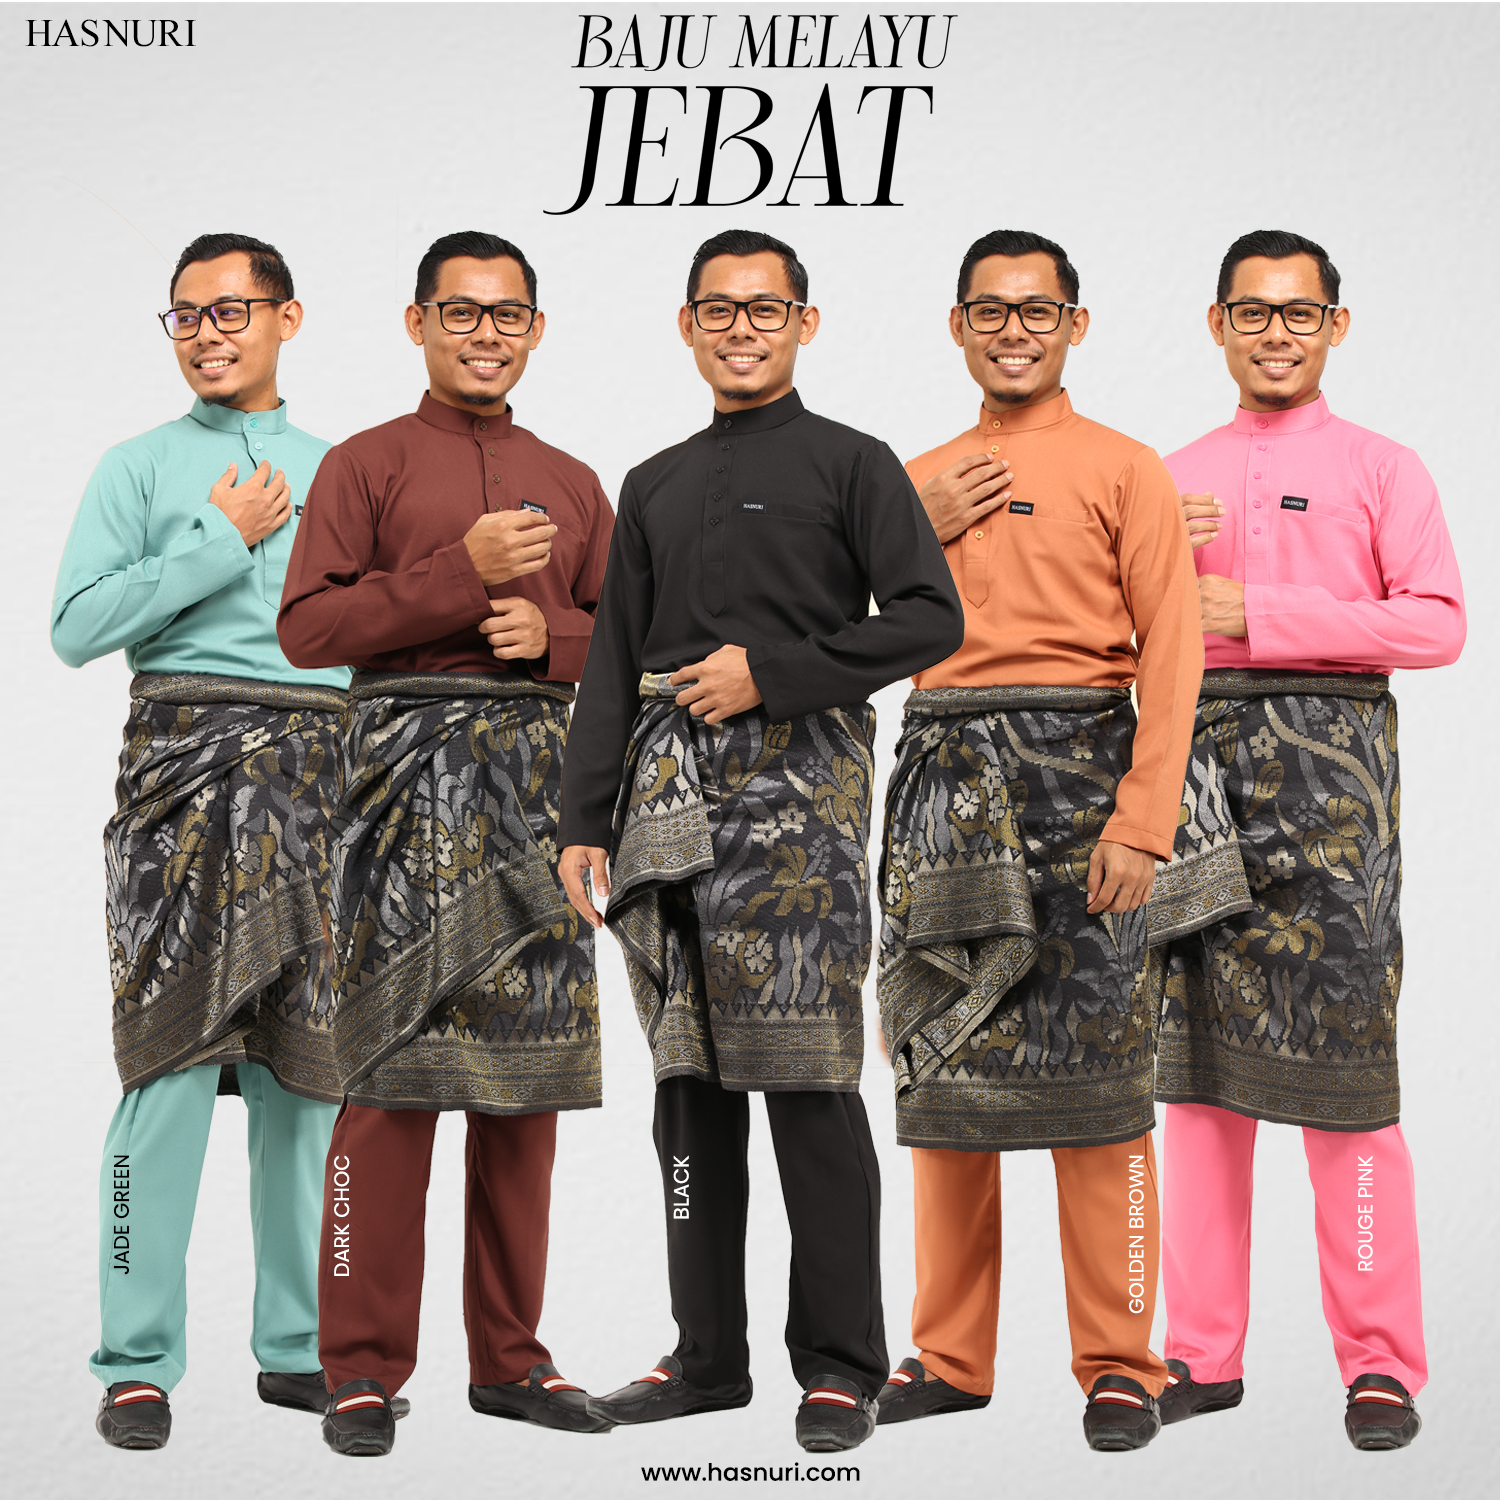 Baju Melayu Jebat - Deep Peach